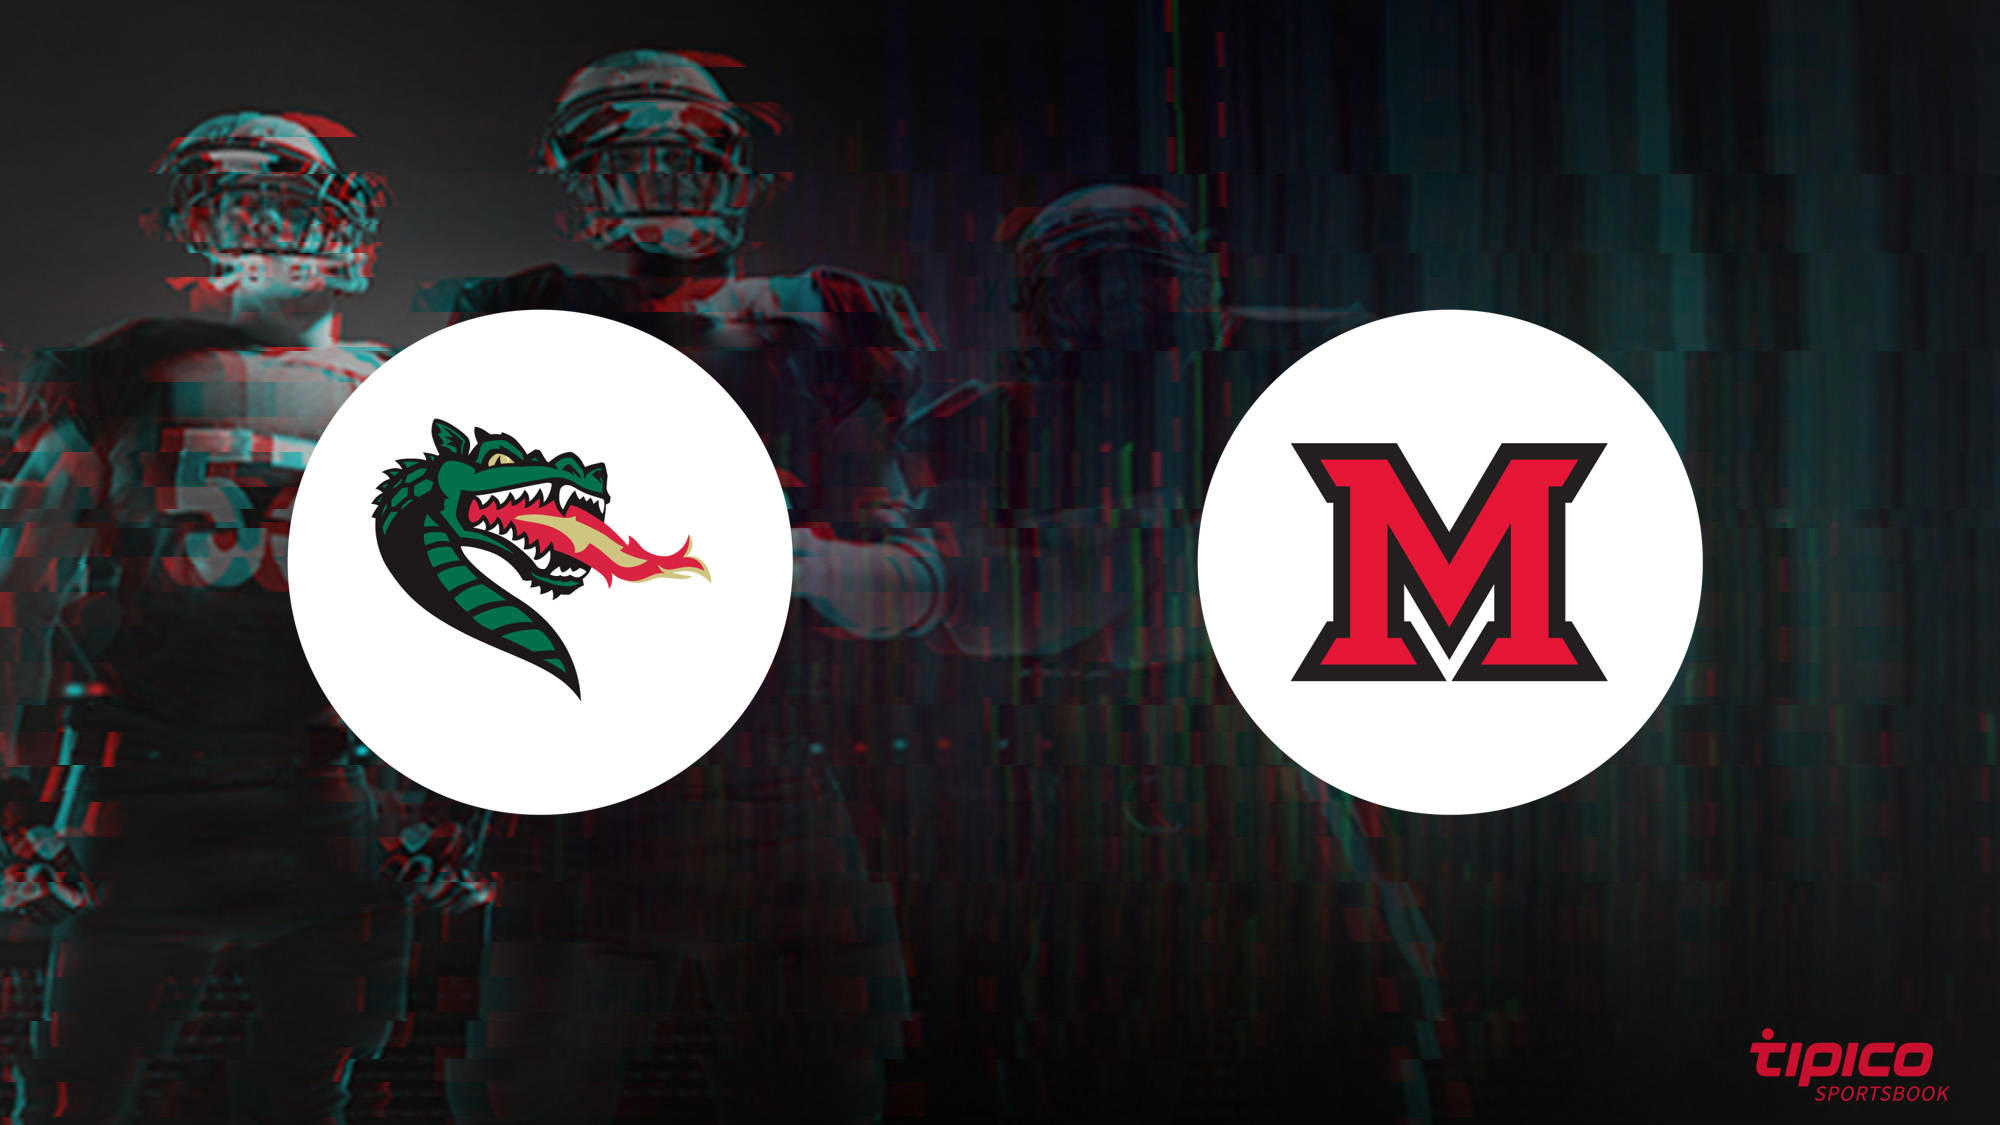 UAB Blazers vs. Miami (OH) RedHawks Preview